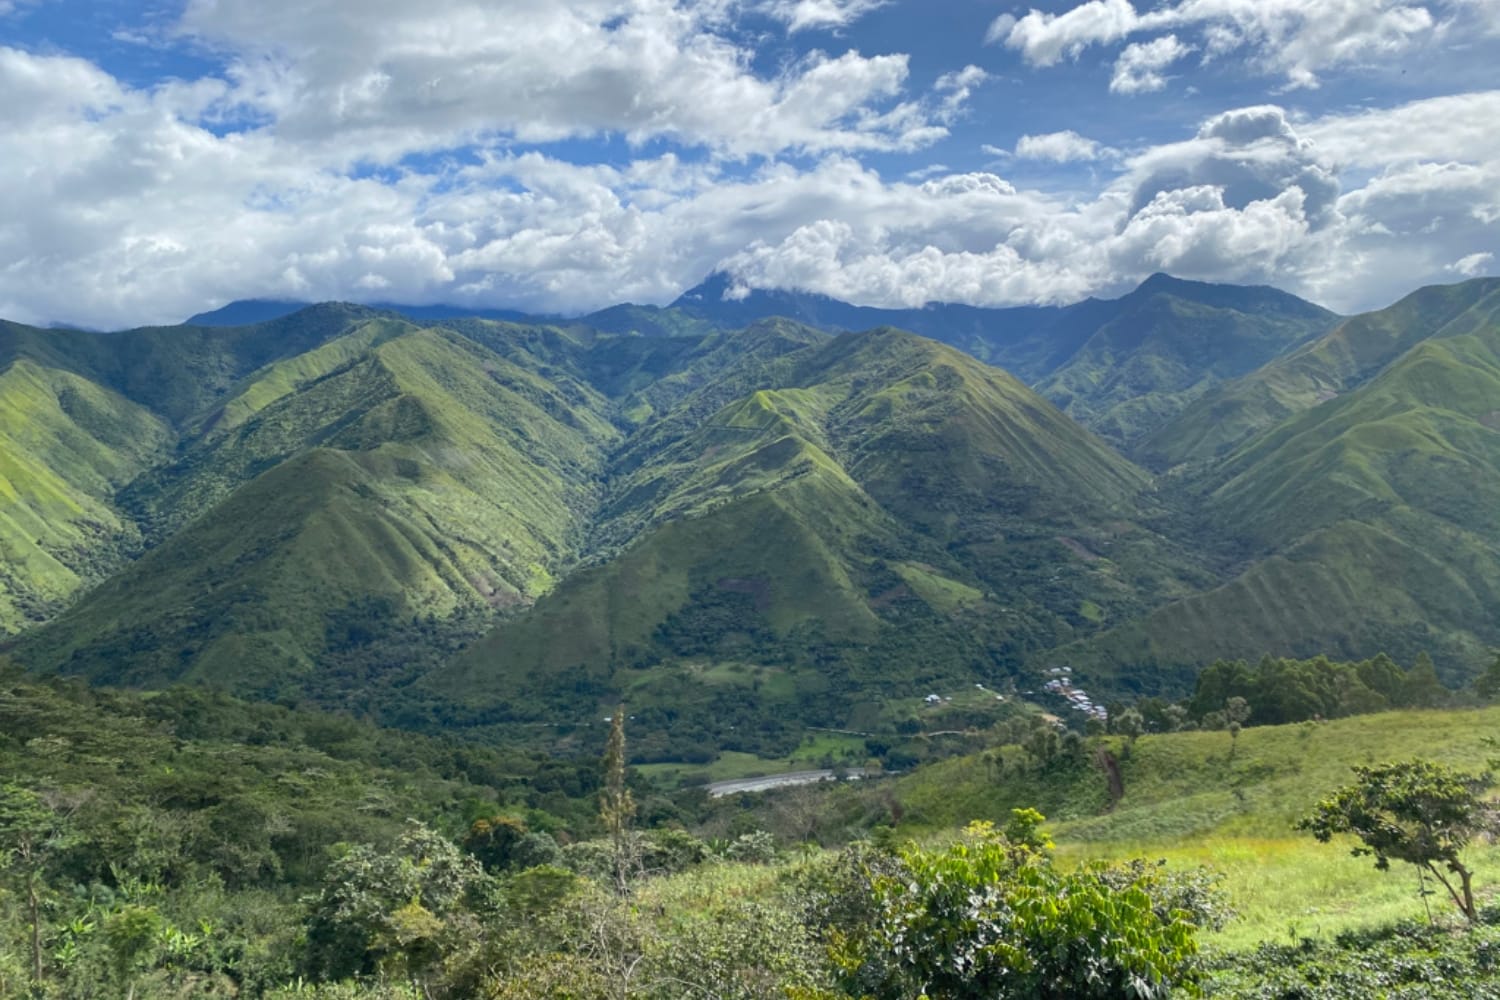 Coffee mountains in Peru